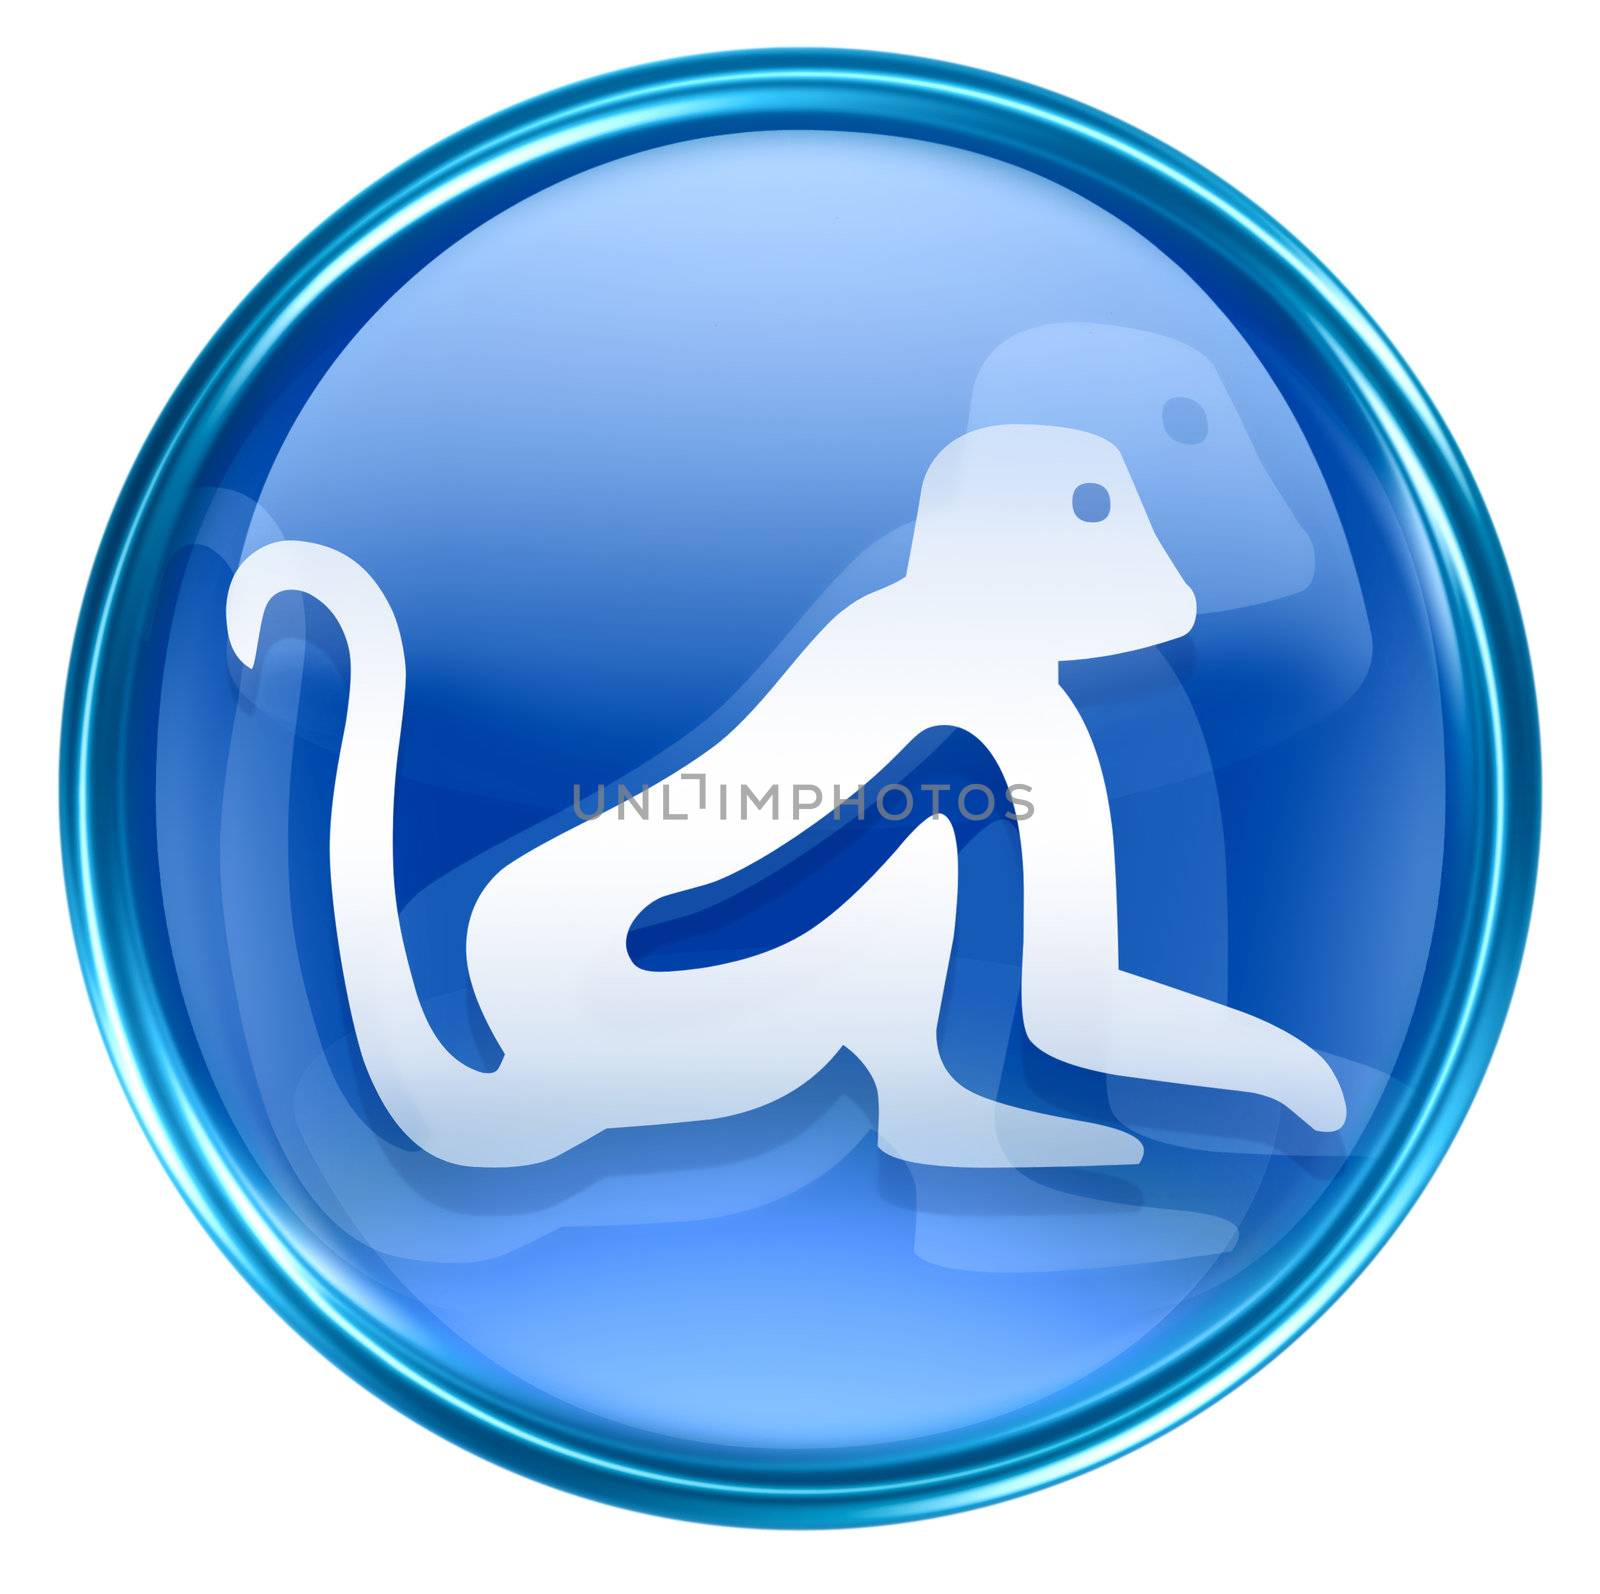 Monkey Zodiac icon blue, isolated on white background. by zeffss